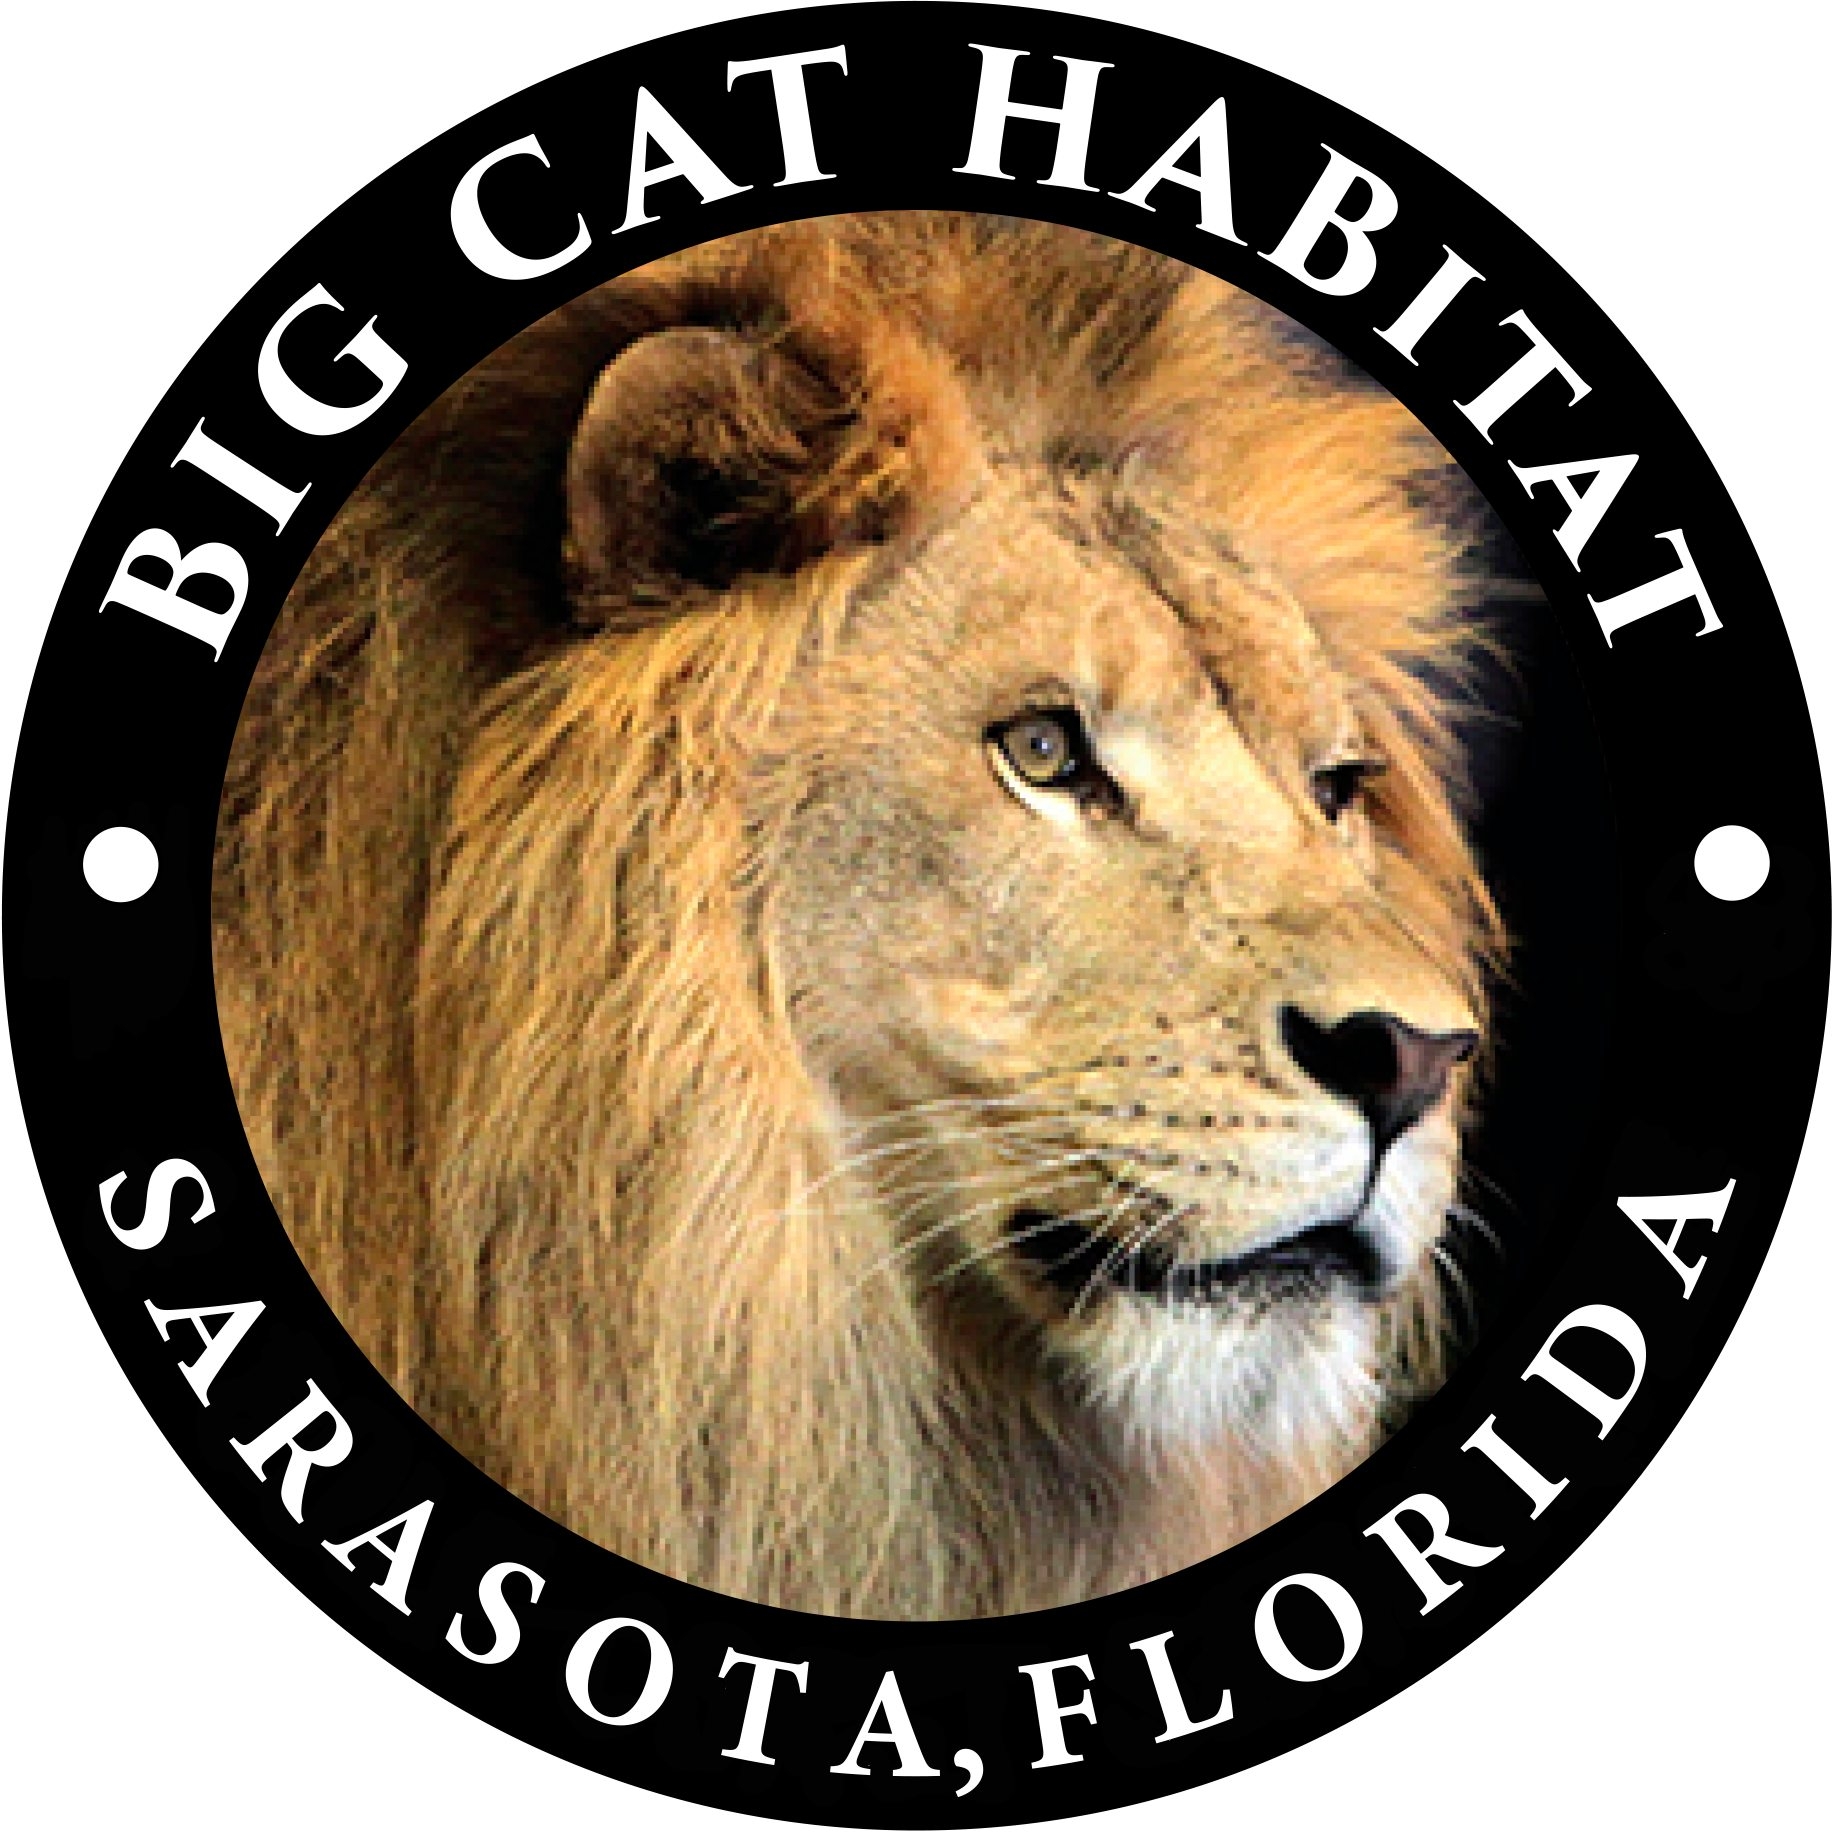 SanctuaryBig Cat Habitat Gulf Coast|Zoo and Wildlife Sanctuary |Travel